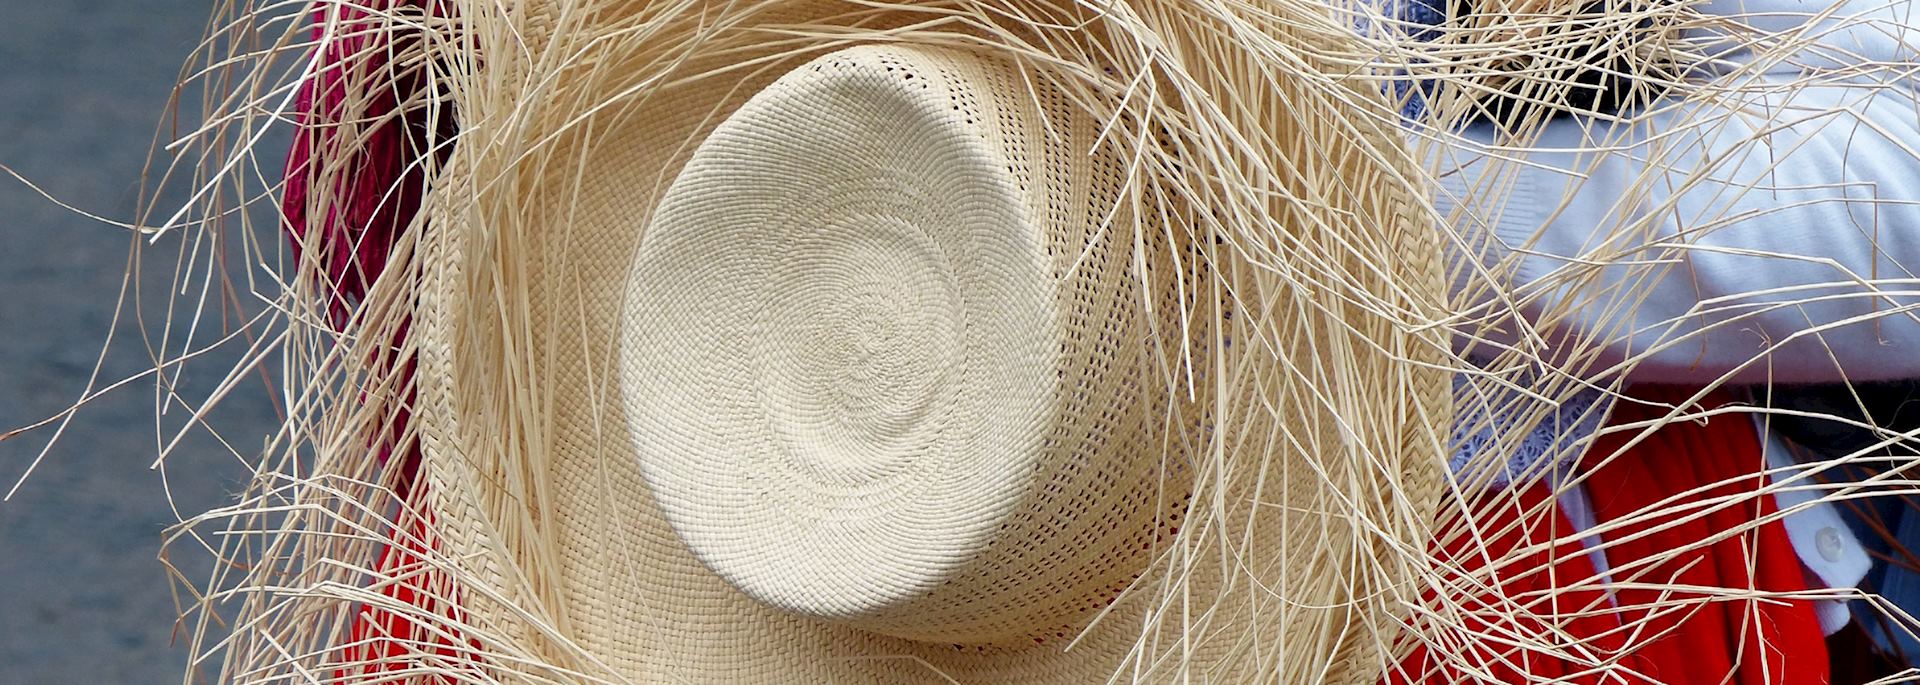 Panama hat making